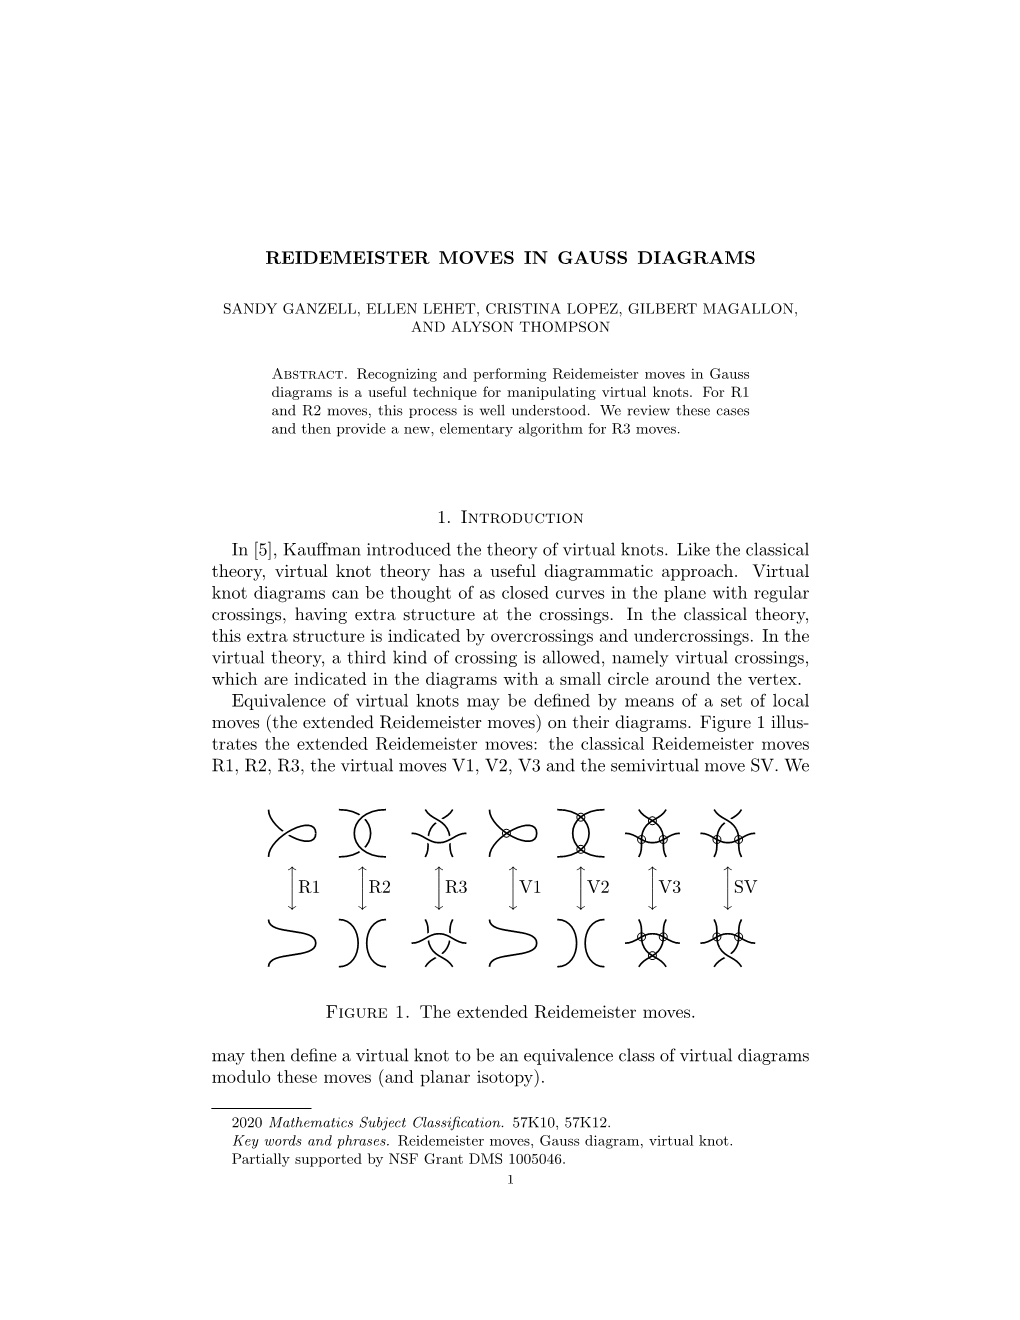 Reidemeister Moves in Gauss Diagrams